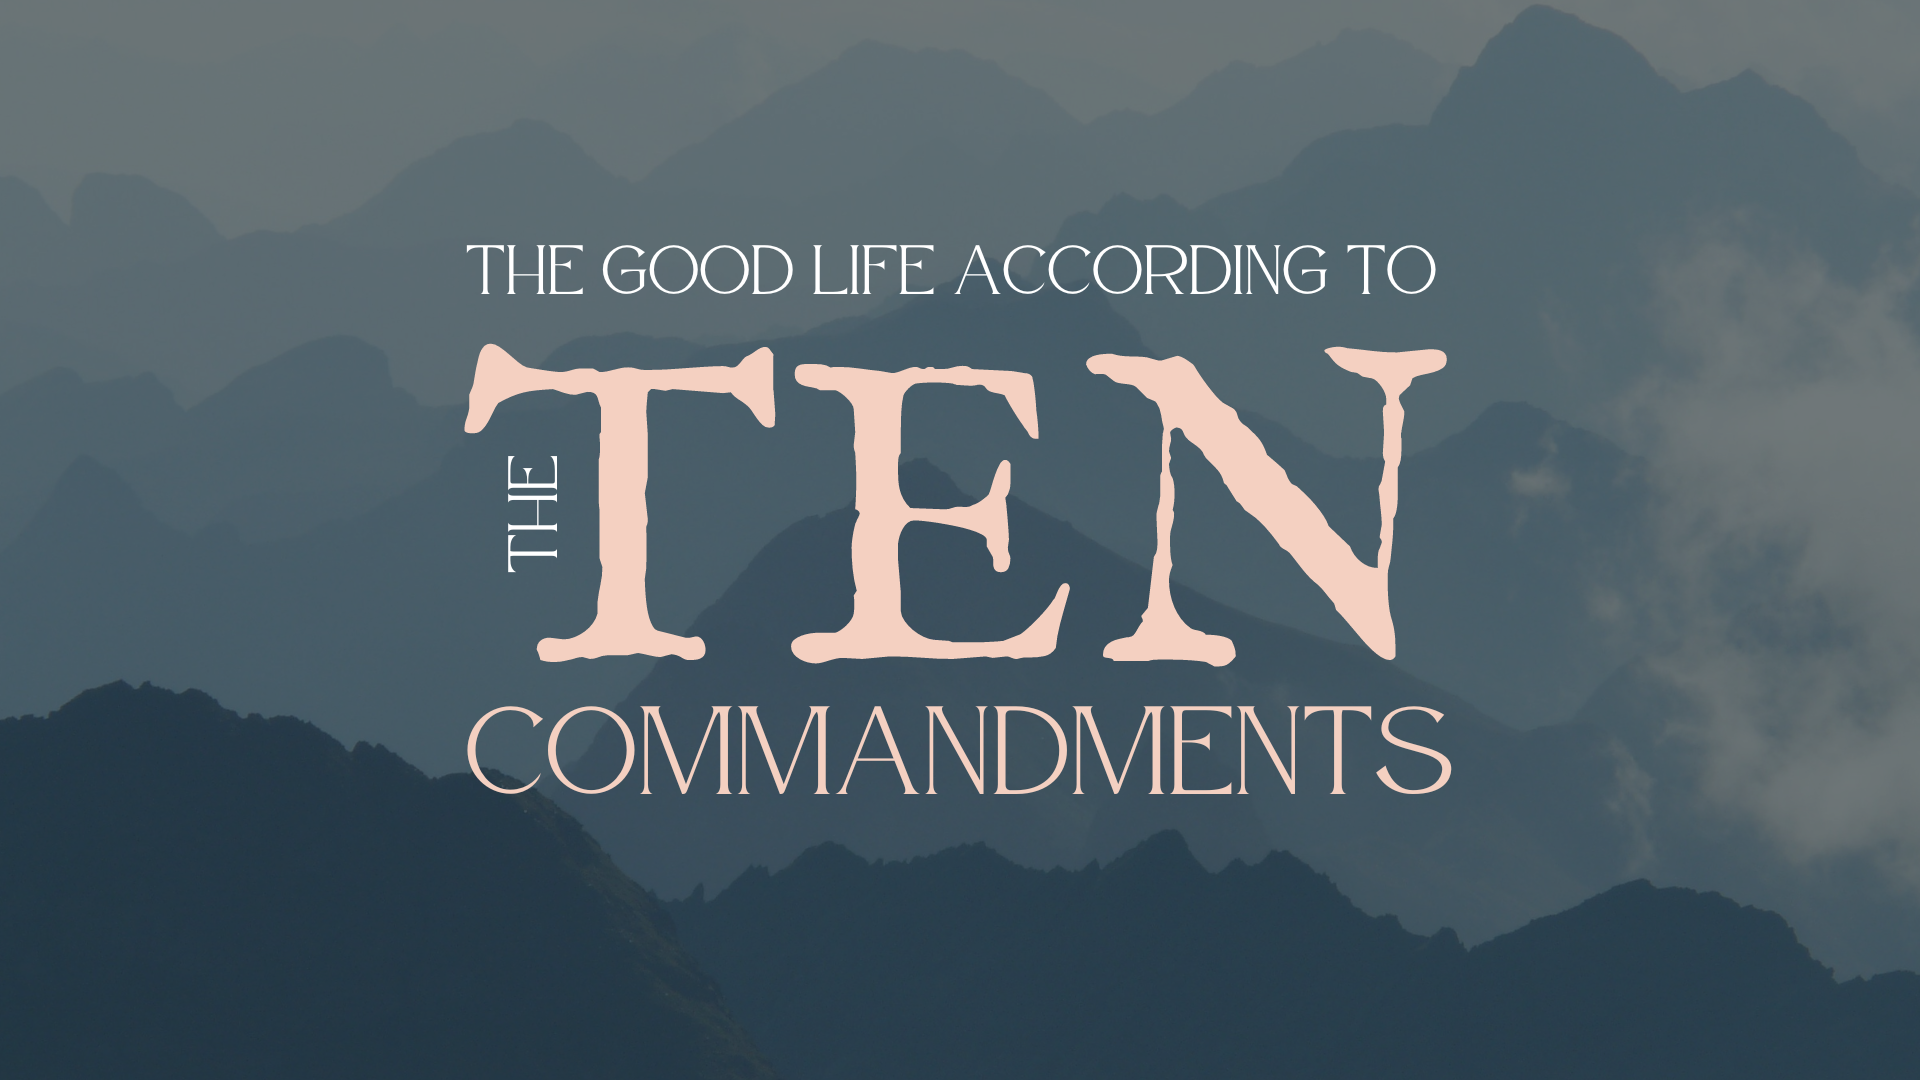 The Good Life According to the Ten Commandments